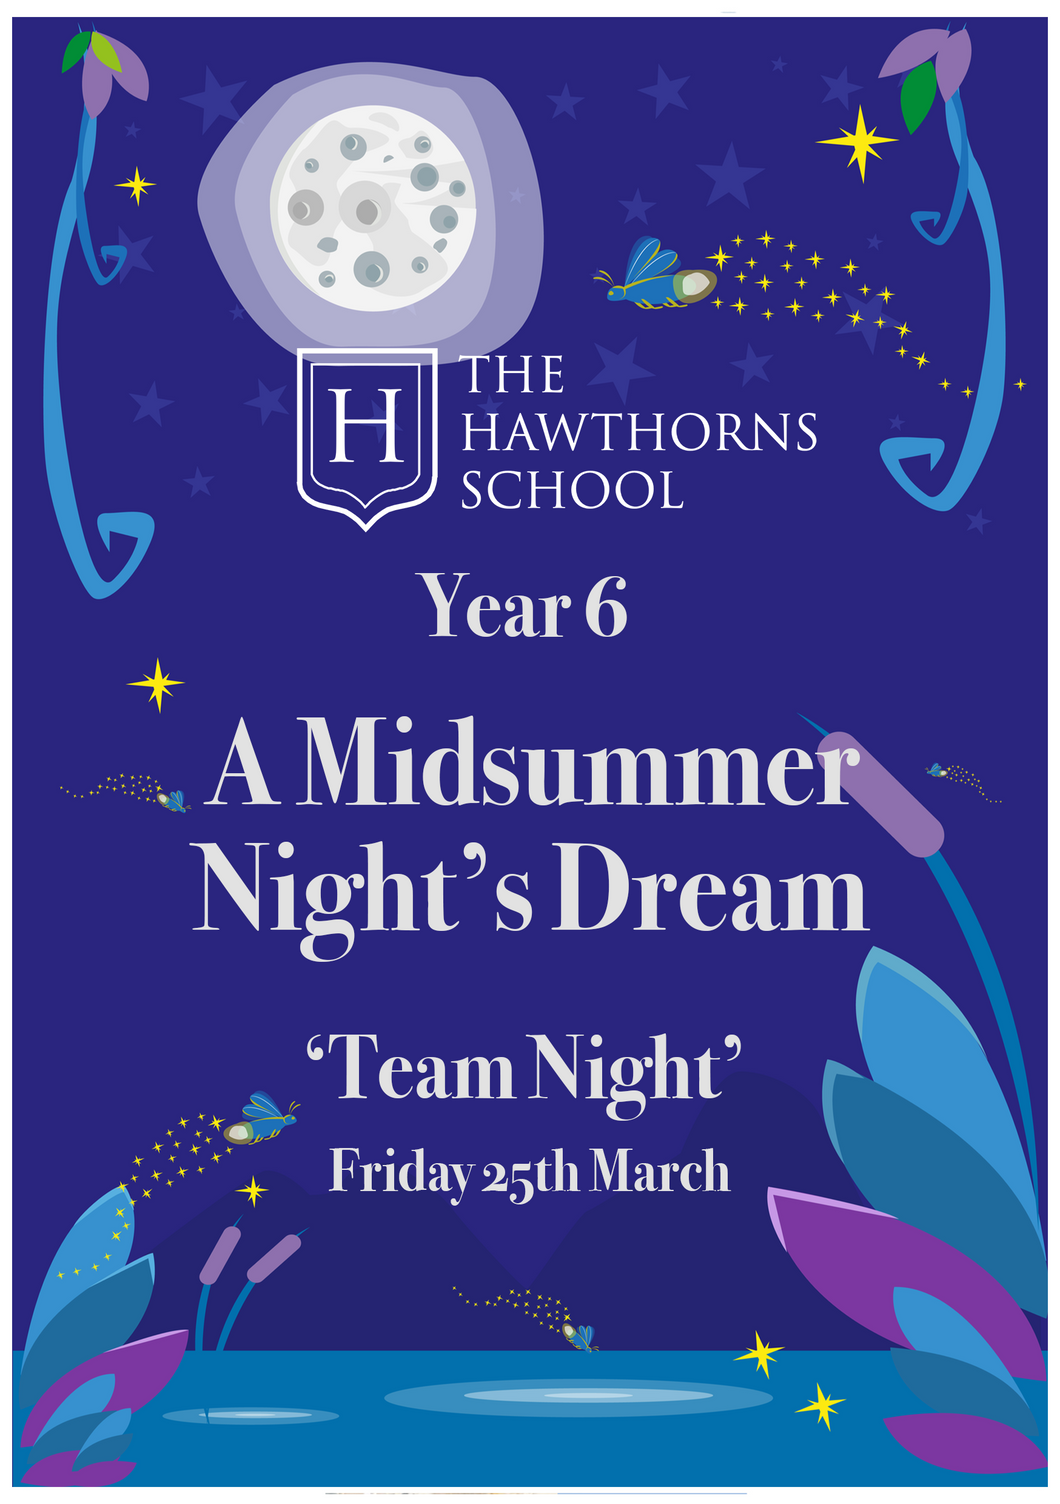 The Hawthorns School - Year 6 - A Midsummer Night's Dream (Team Night)